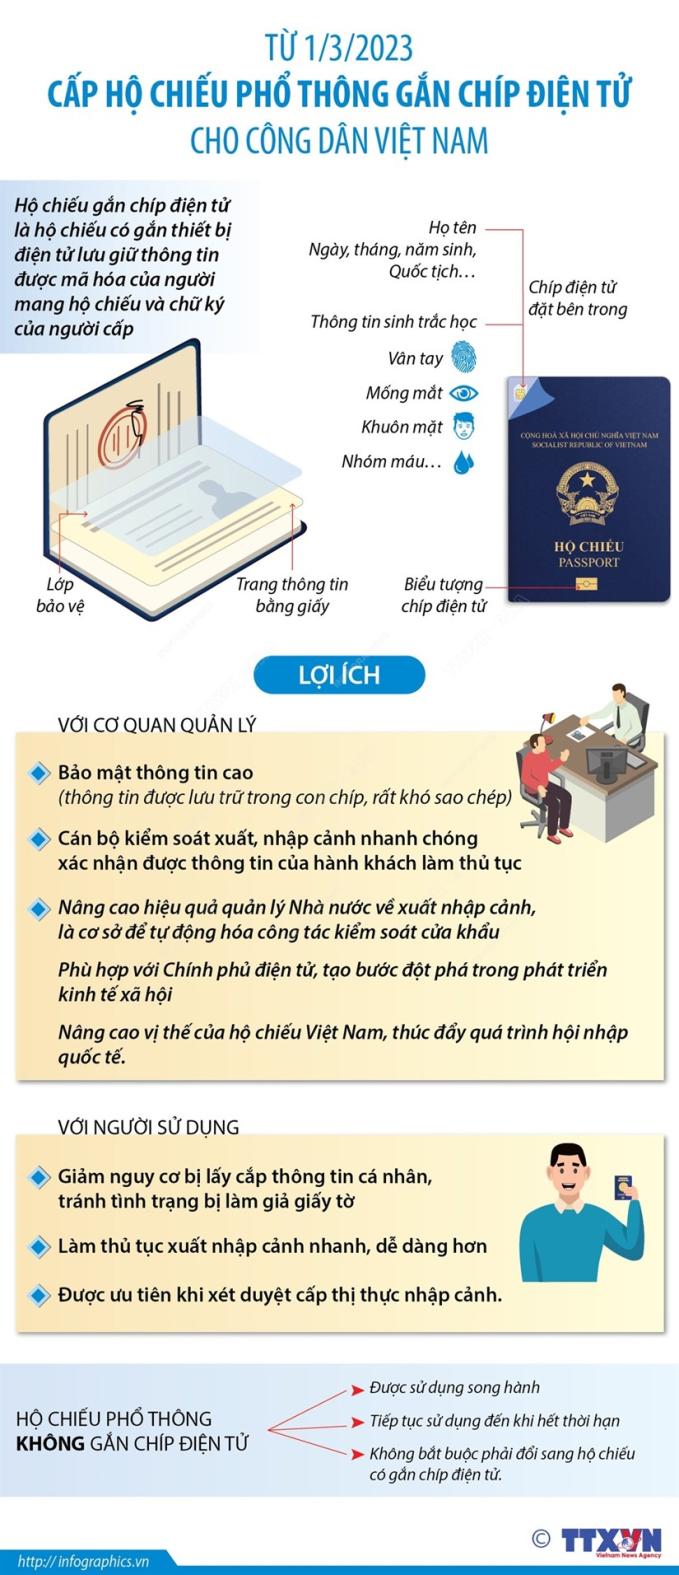 ho_chieu_pho_thong_gan_chip_dien_tu_cho_cong_dan_viet_nam